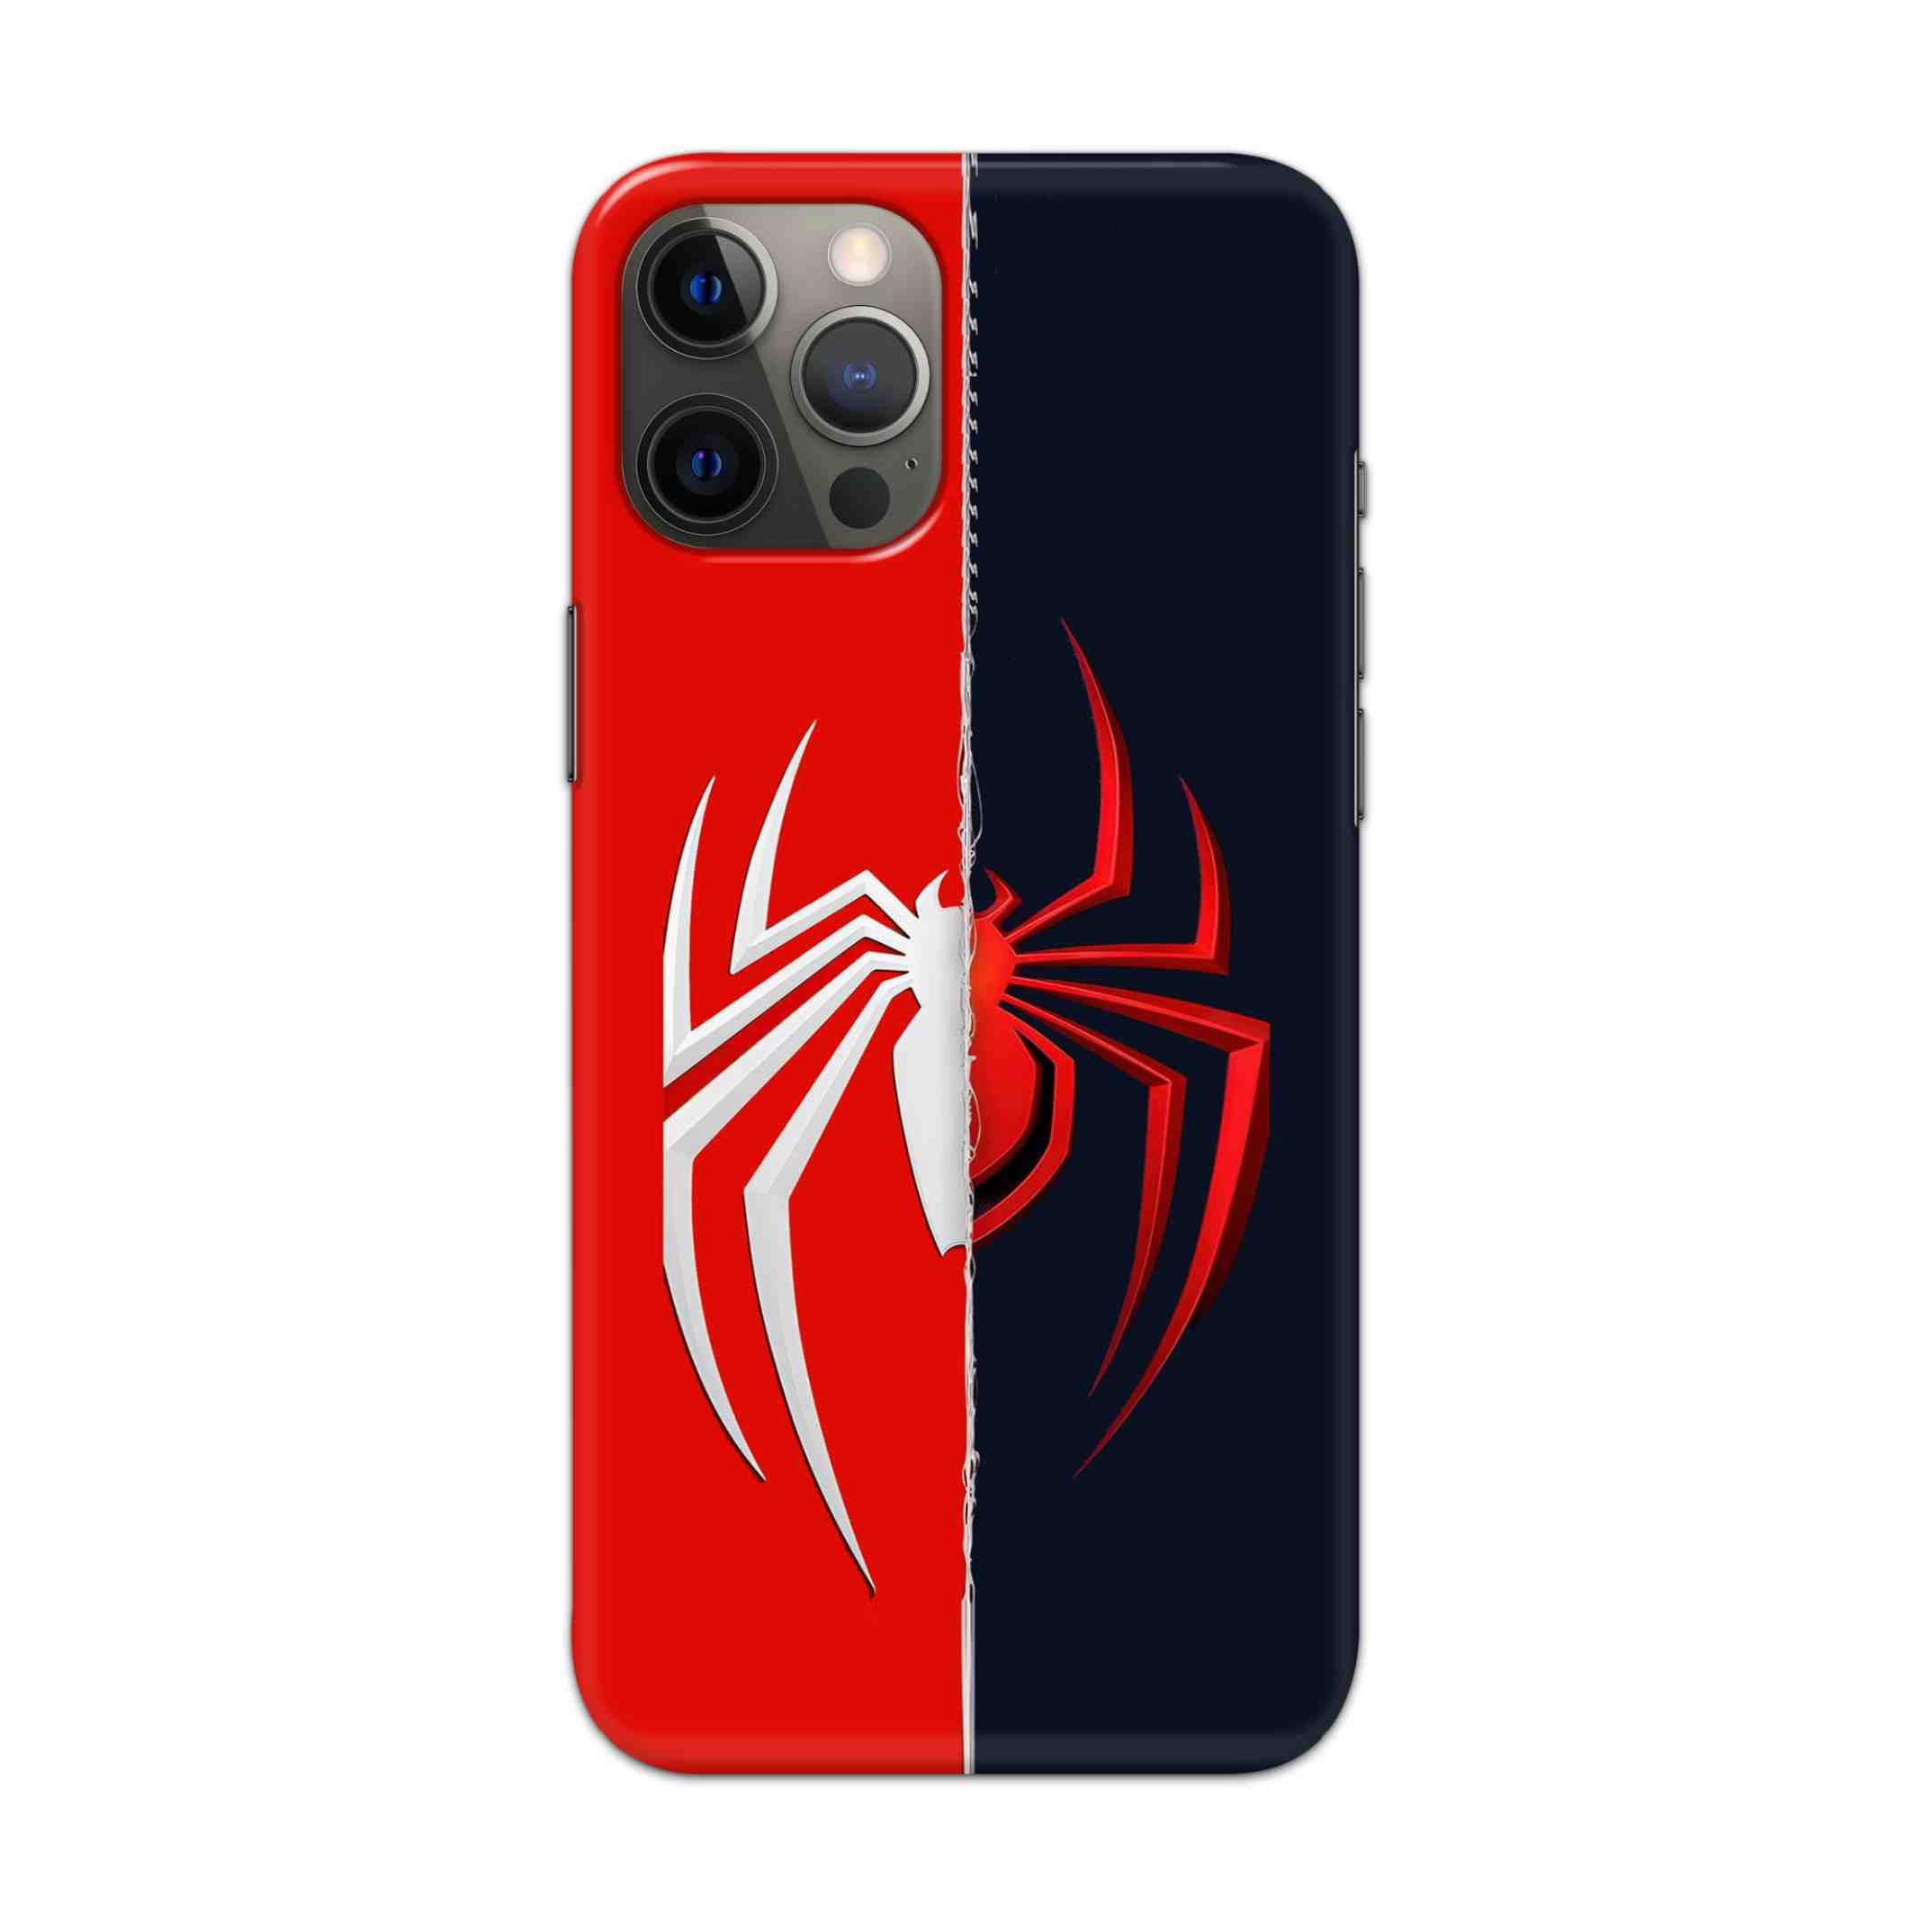 Buy Spideman Vs Venom Hard Back Mobile Phone Case/Cover For Apple iPhone 12 pro max Online